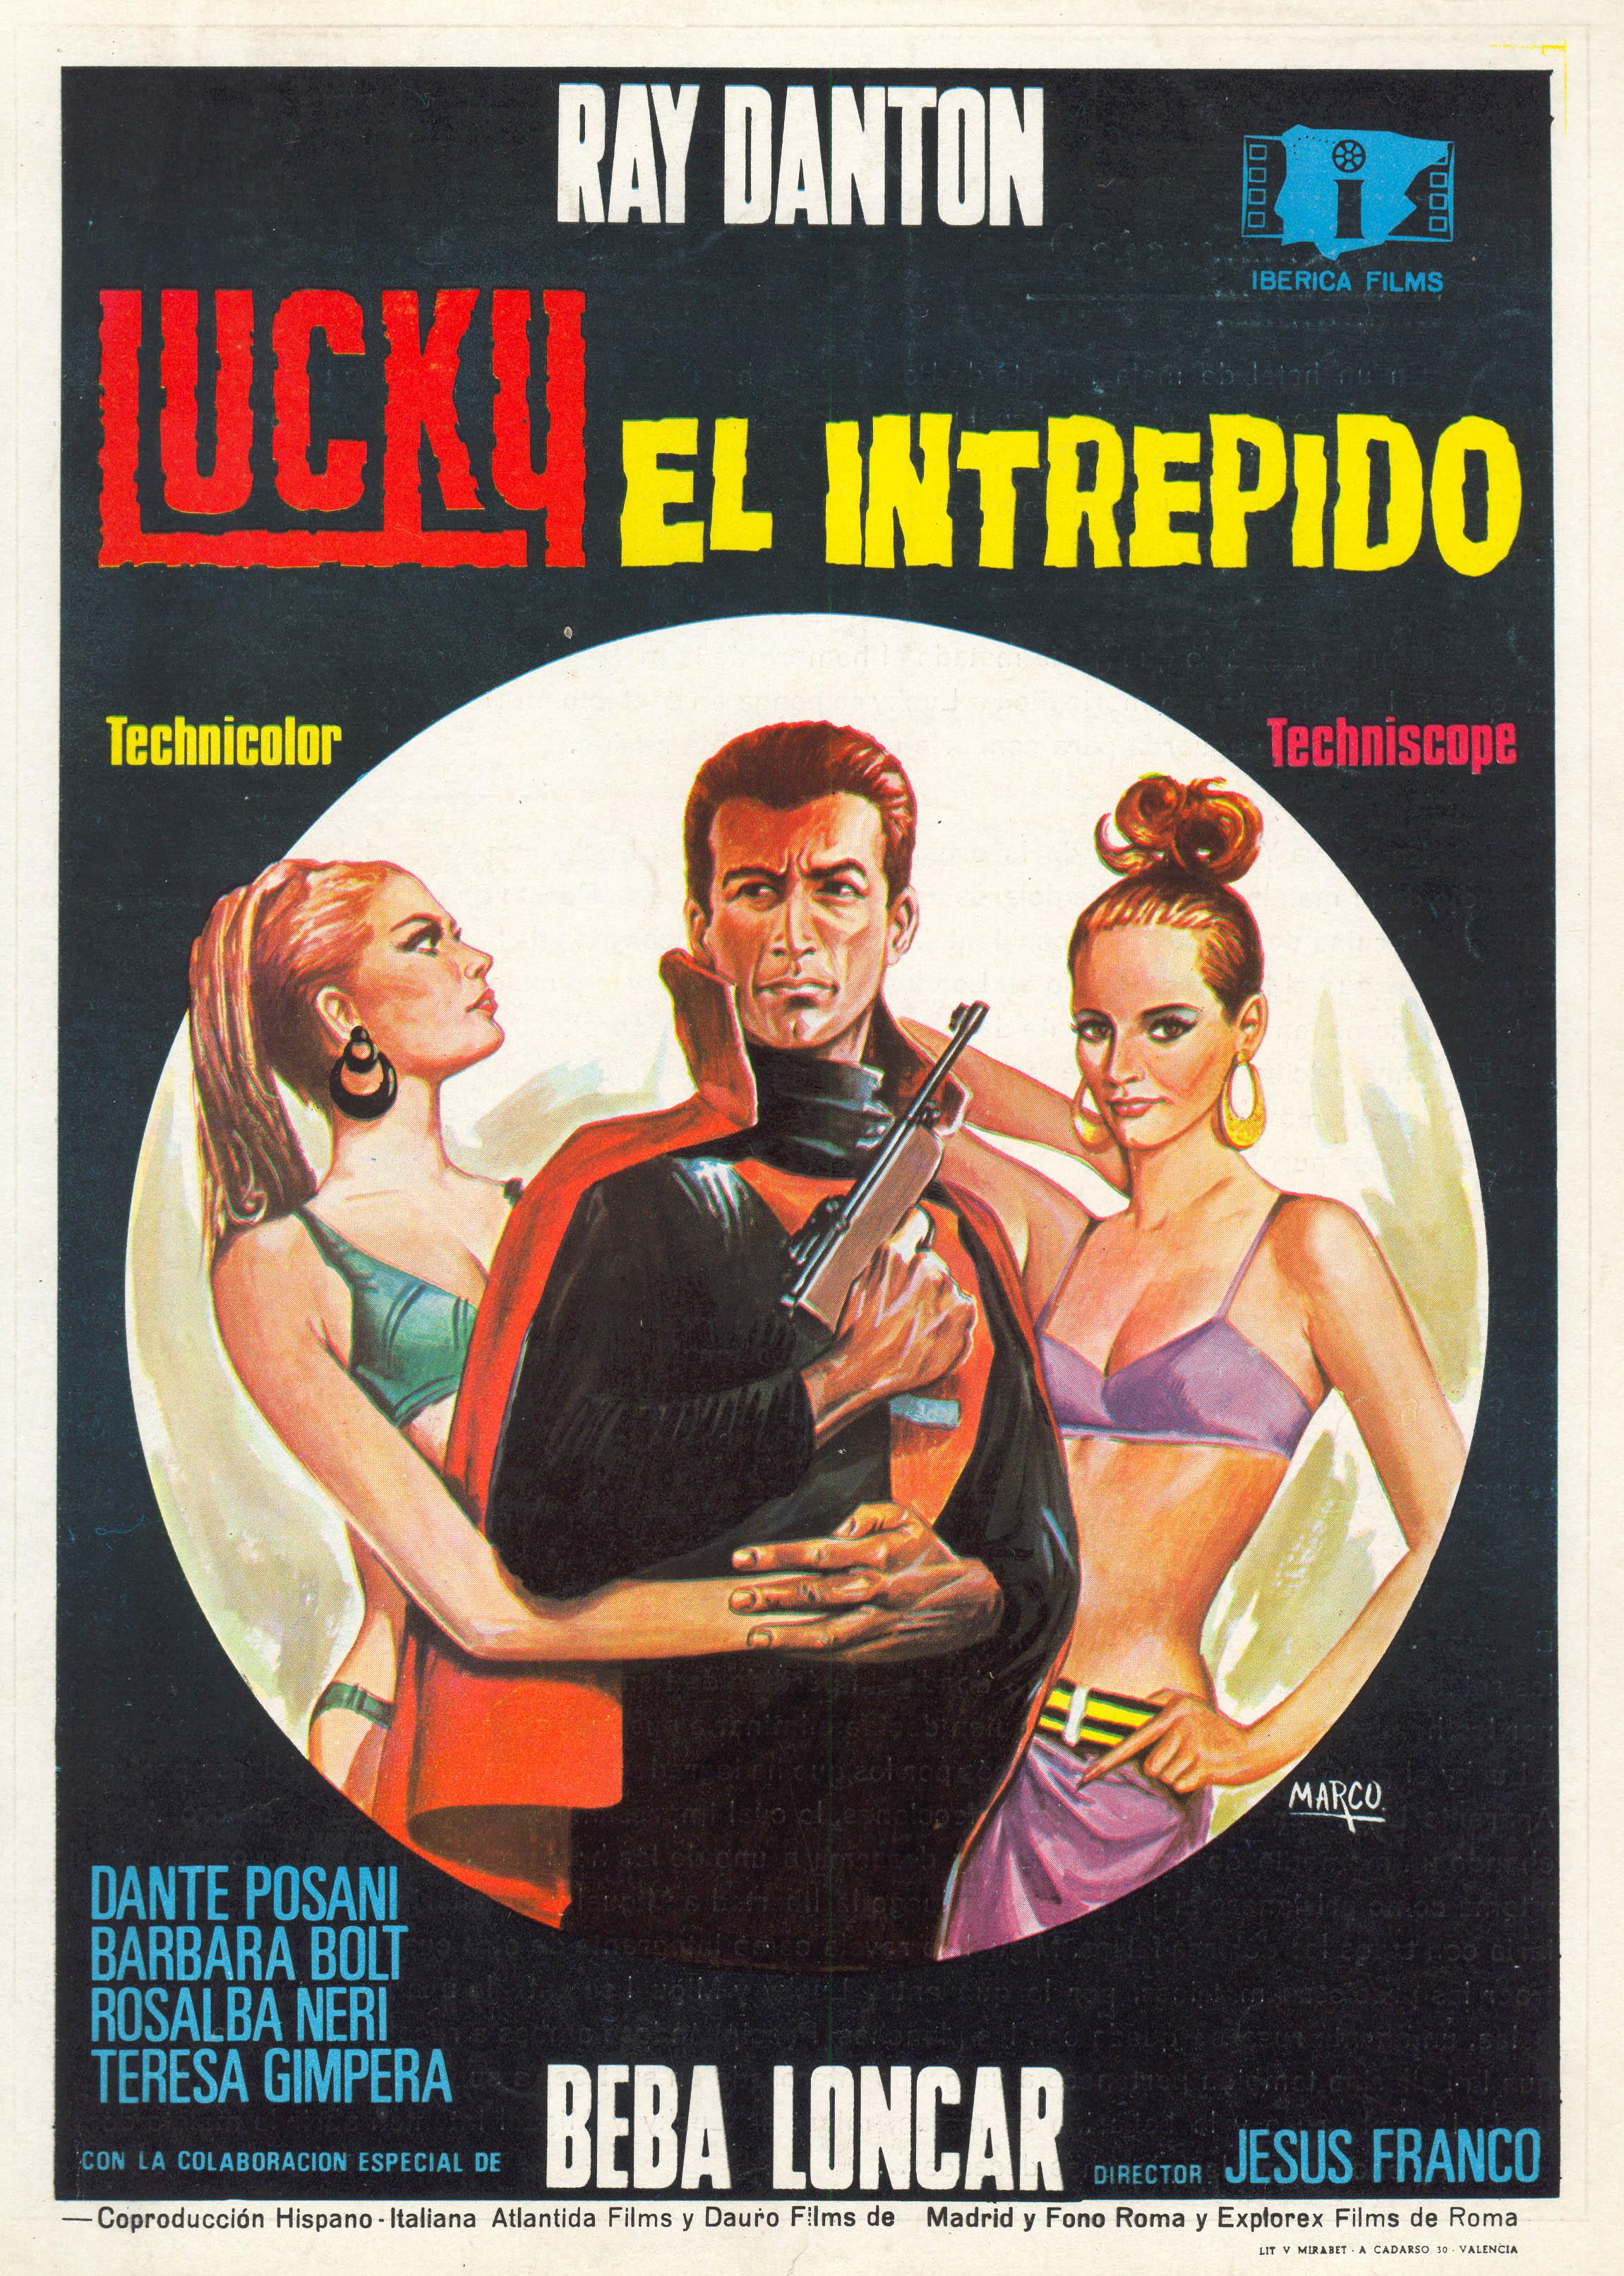 Lucky, the Inscrutable (1967)